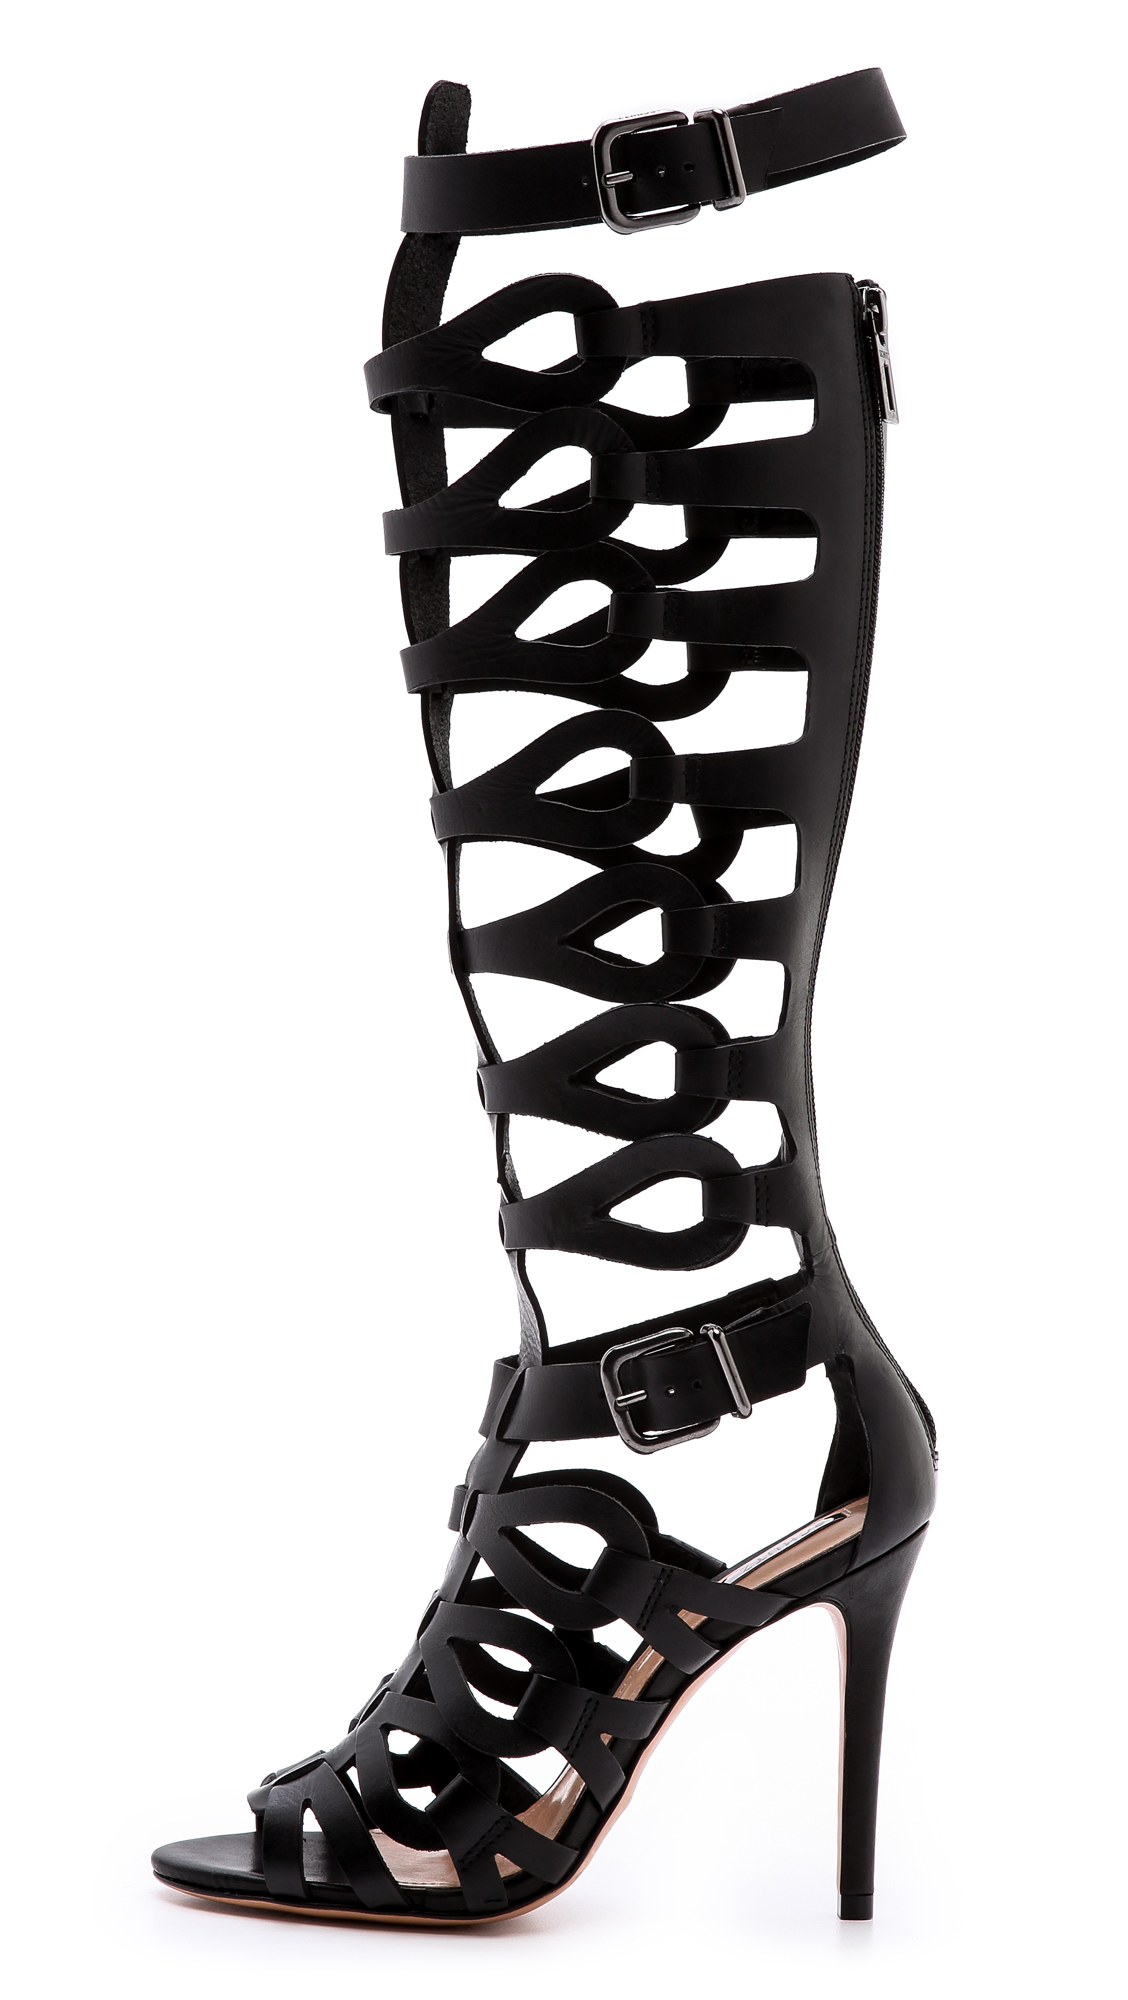 Lyst - Schutz Eirini Cutout Tall Gladiator Sandals in Black